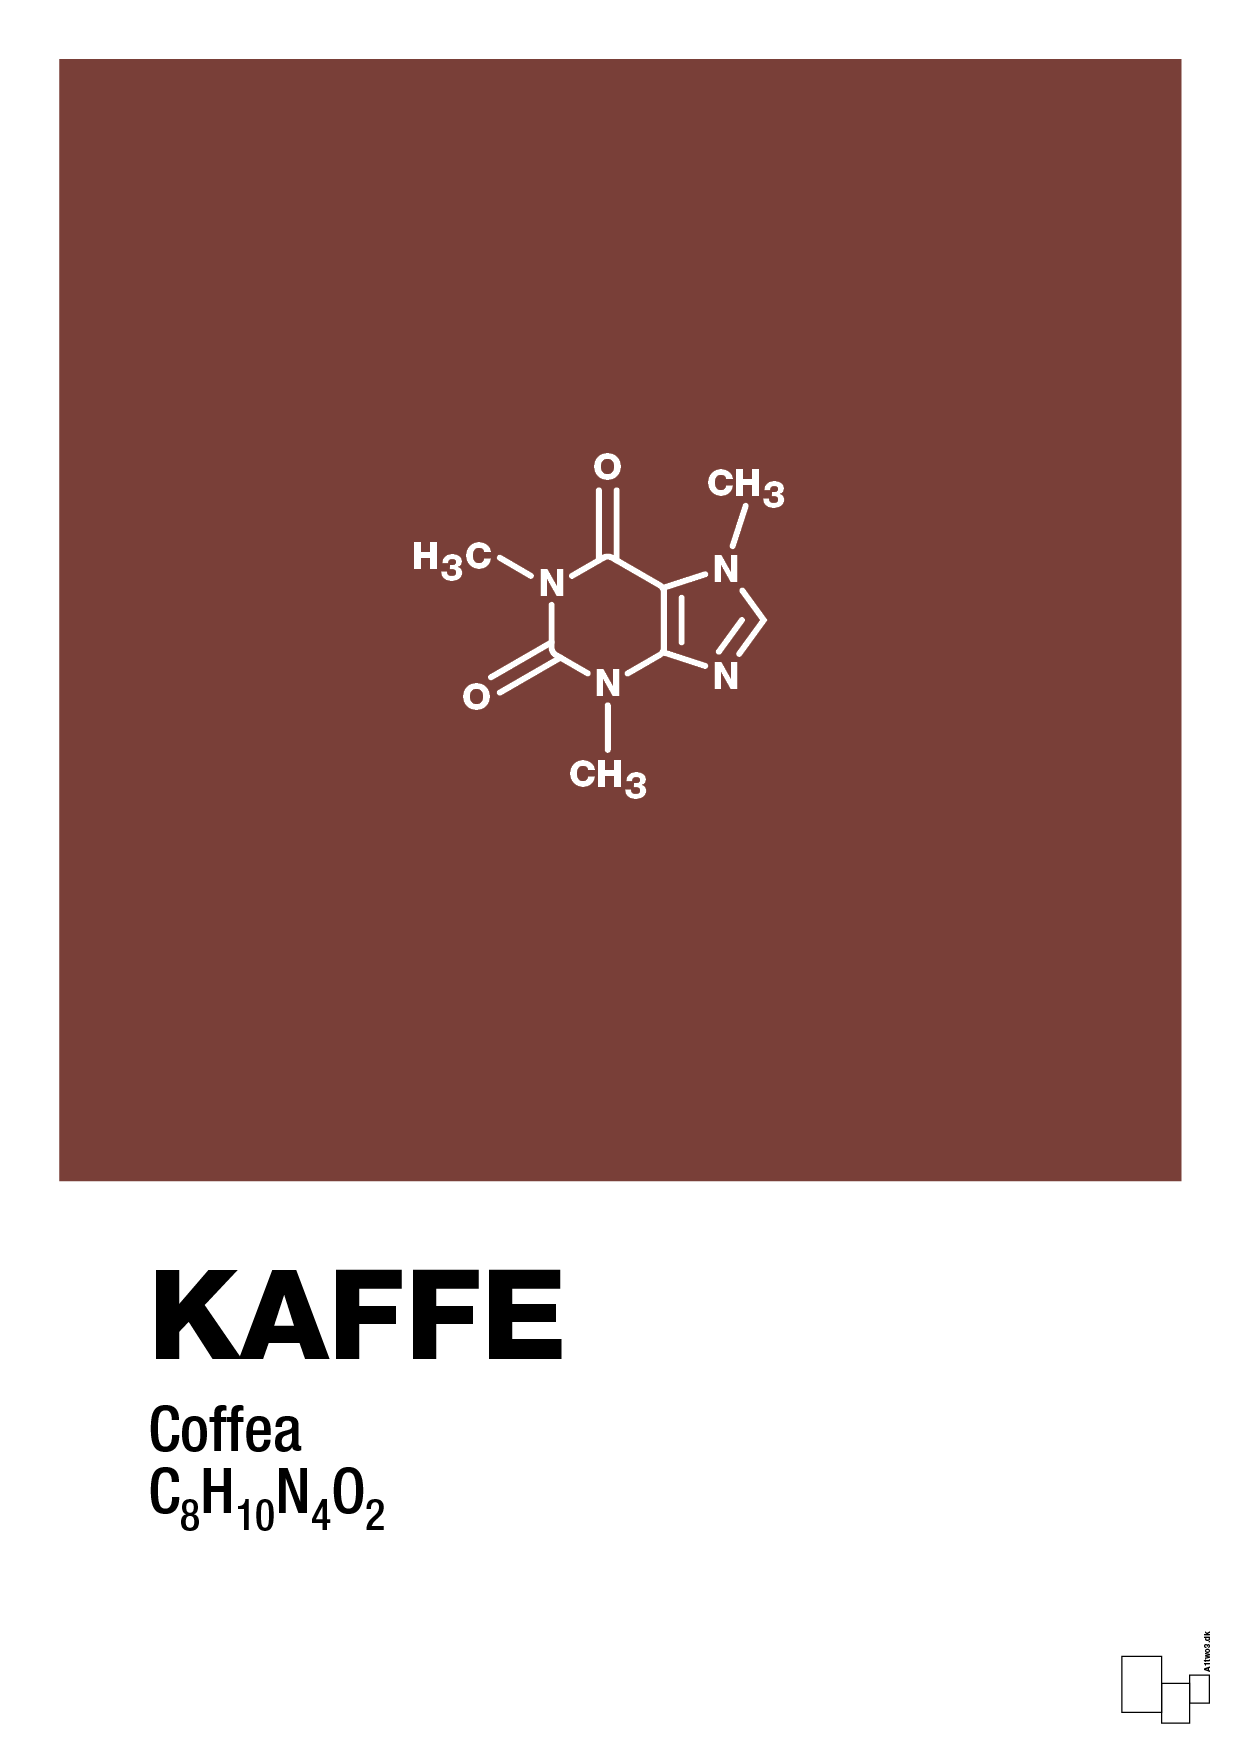 kaffe - Plakat med Videnskab i Red Pepper